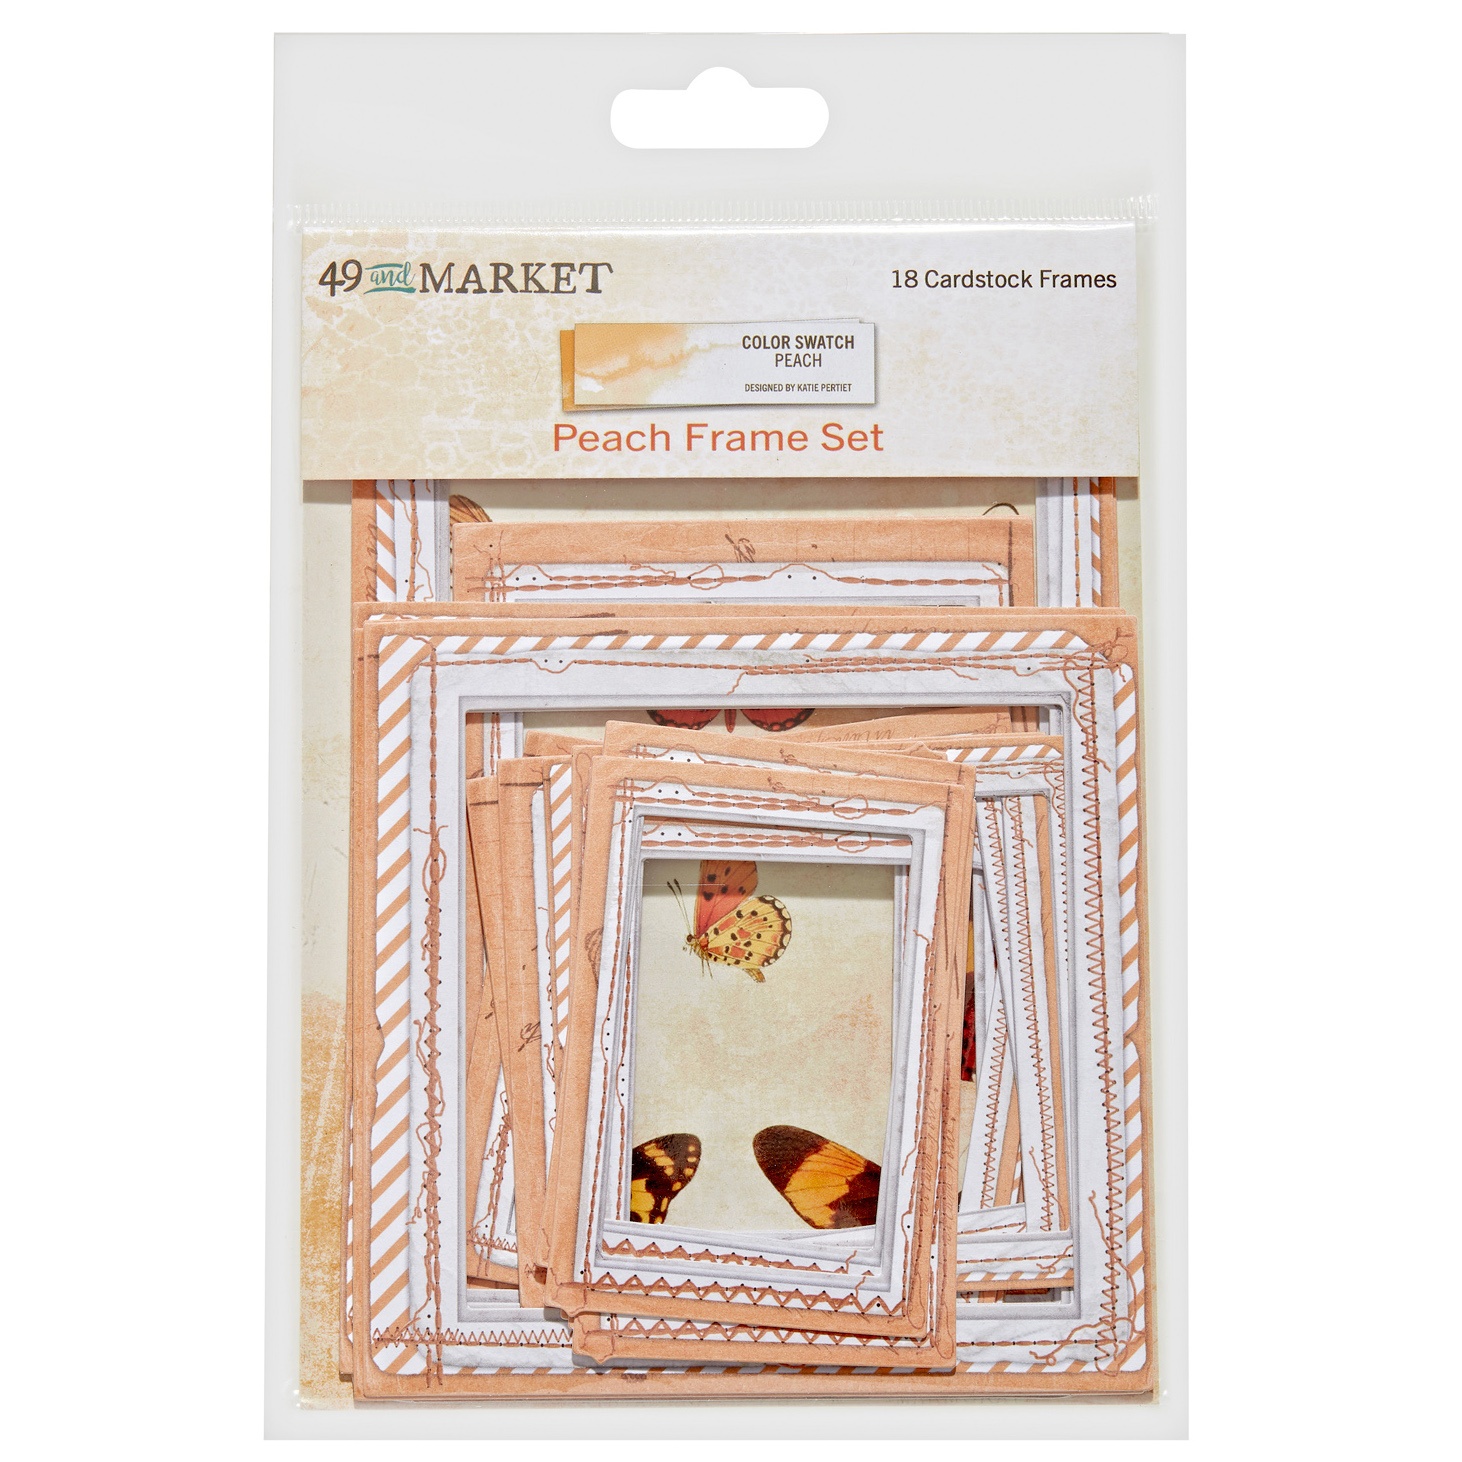 49 & Market Color Swatch Peach Frames